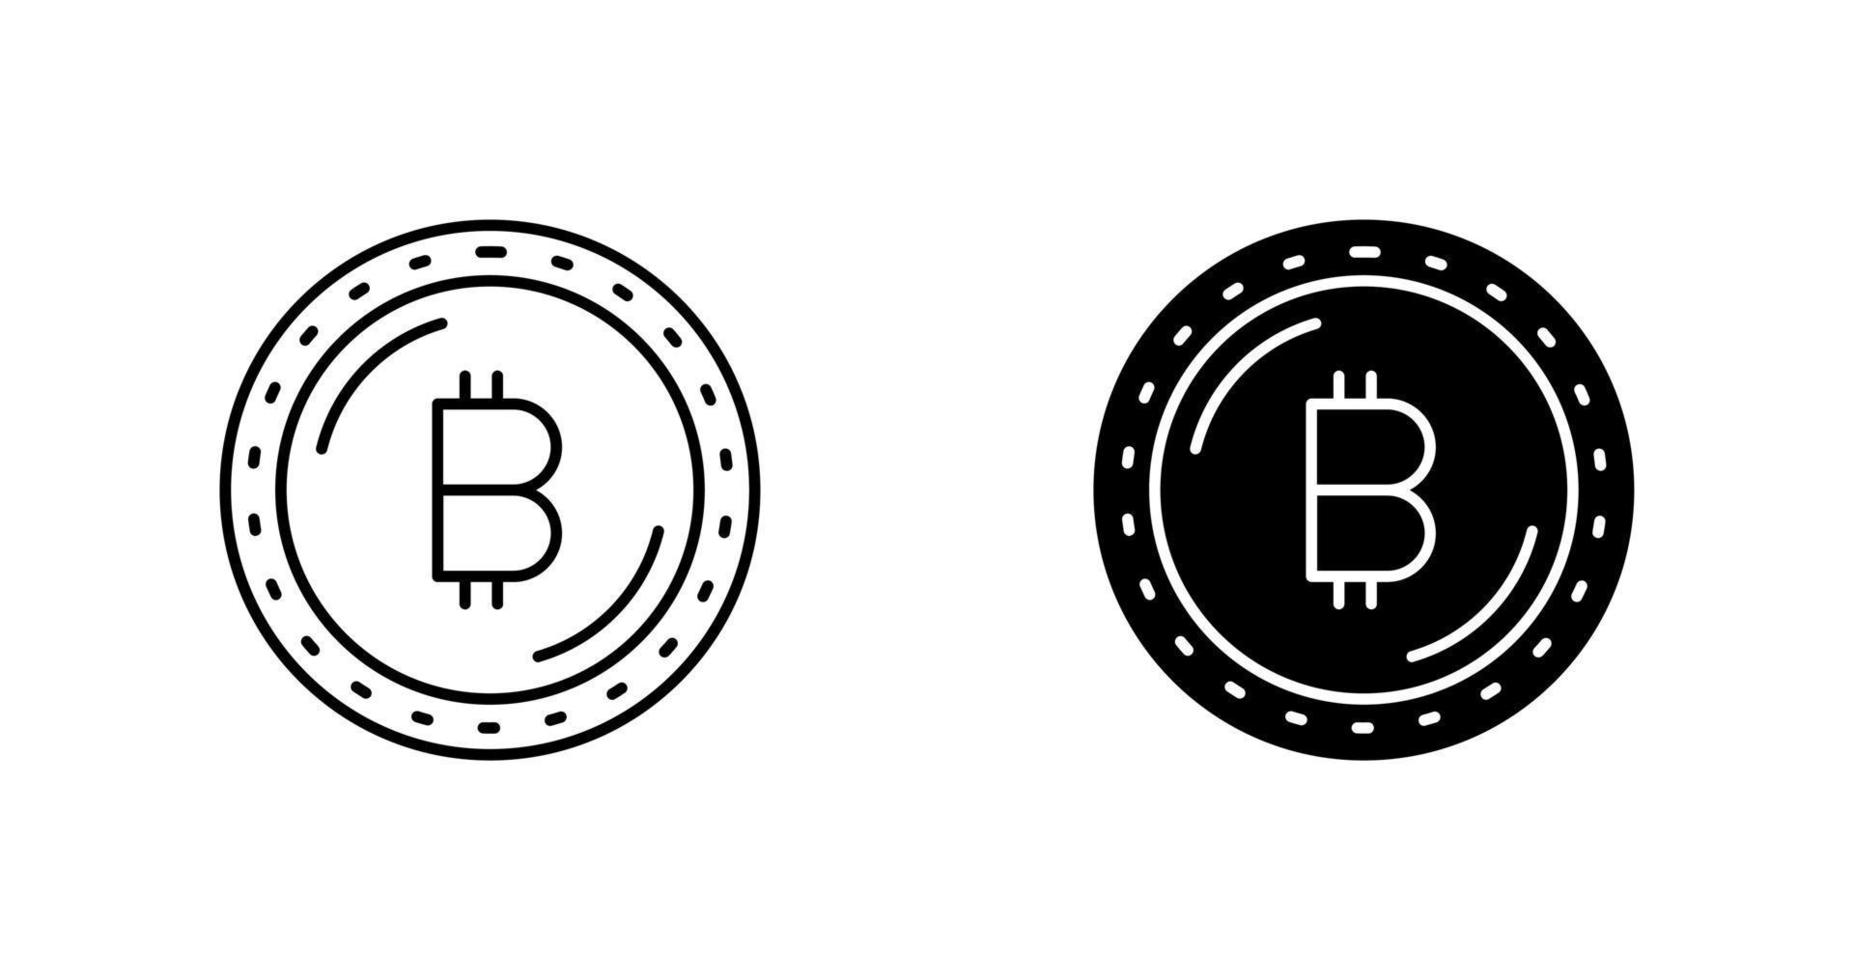 bitcoin moneta vettore icona